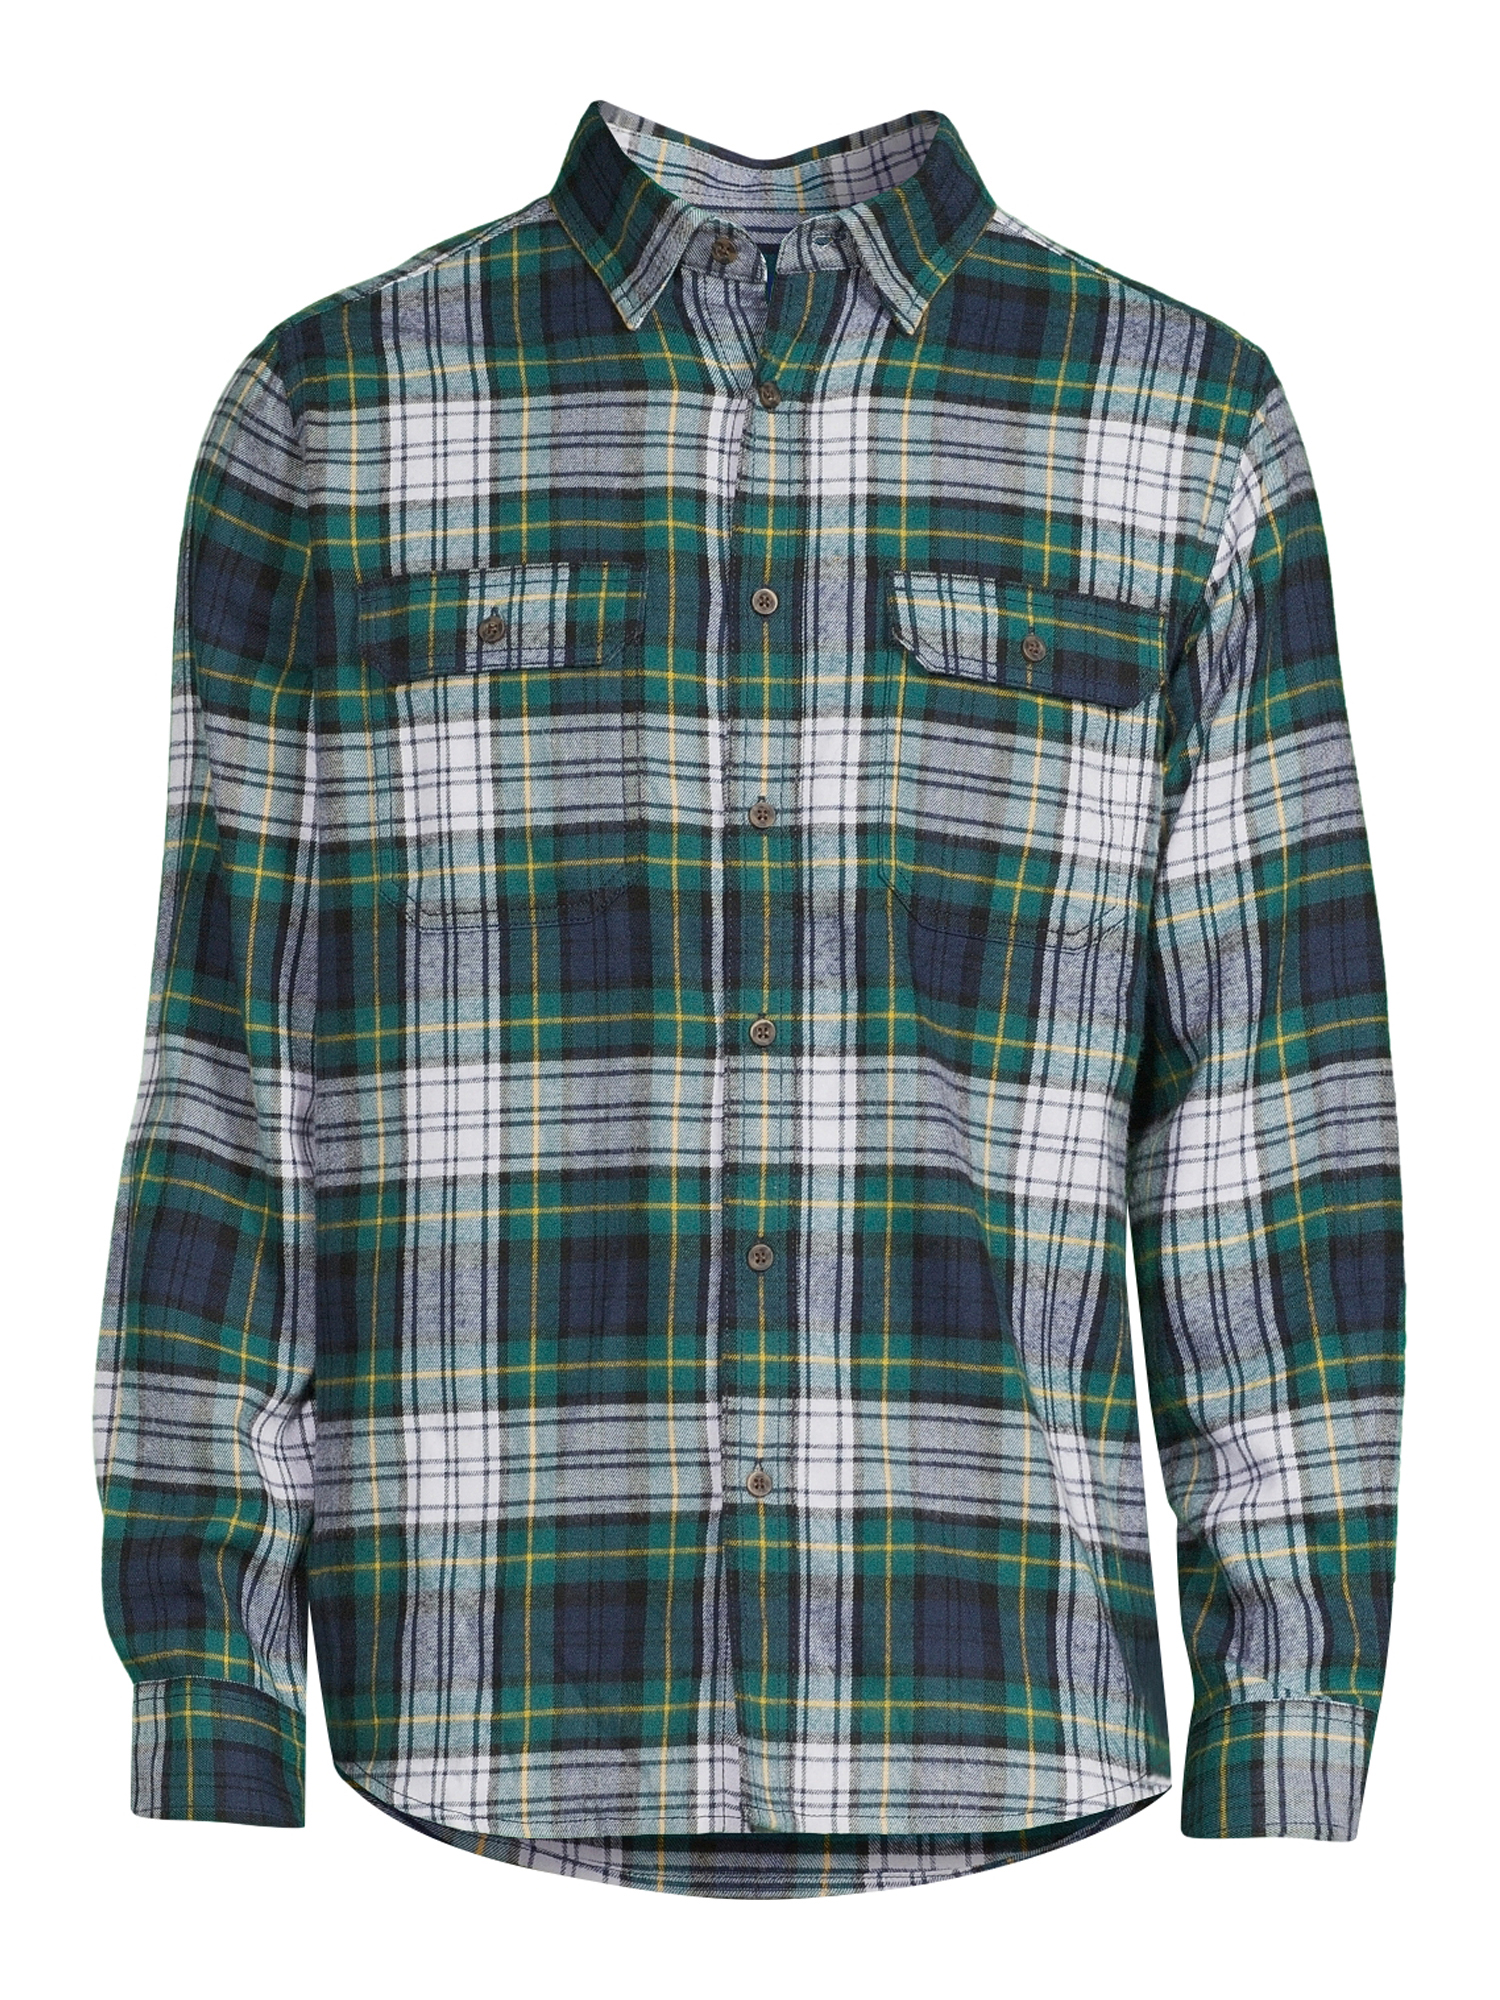 George Men's and Big Men's Super Soft Flannel Shirt, up to 5XLT - image 5 of 5